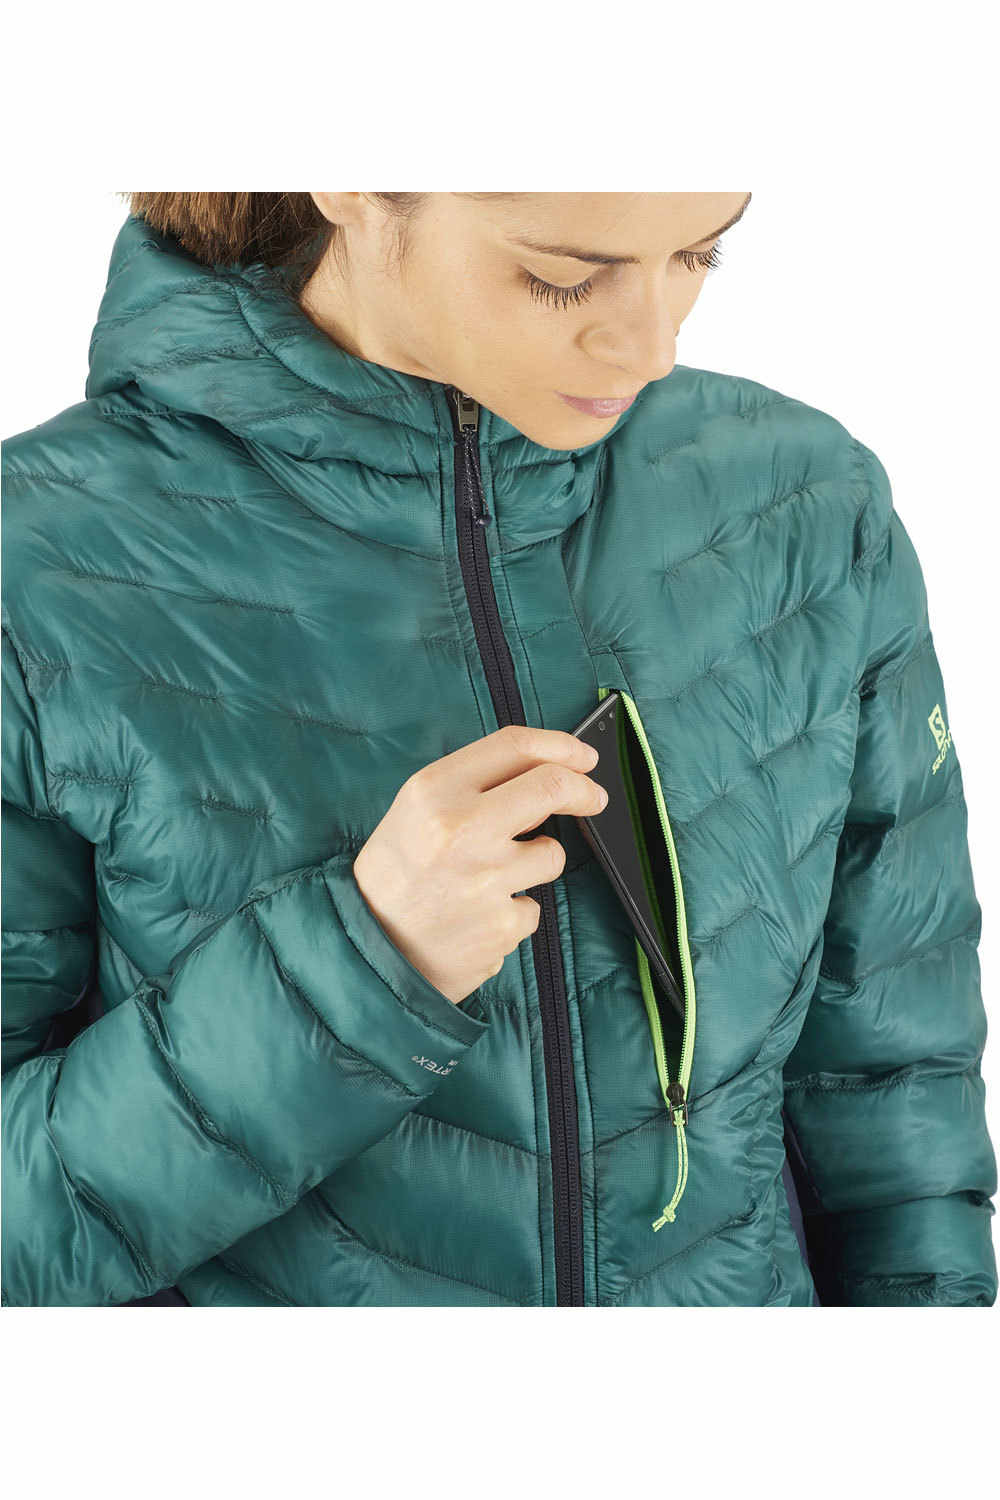 Salomon chaqueta outdoor mujer OUTPEAK INSUL HOODIE W 03